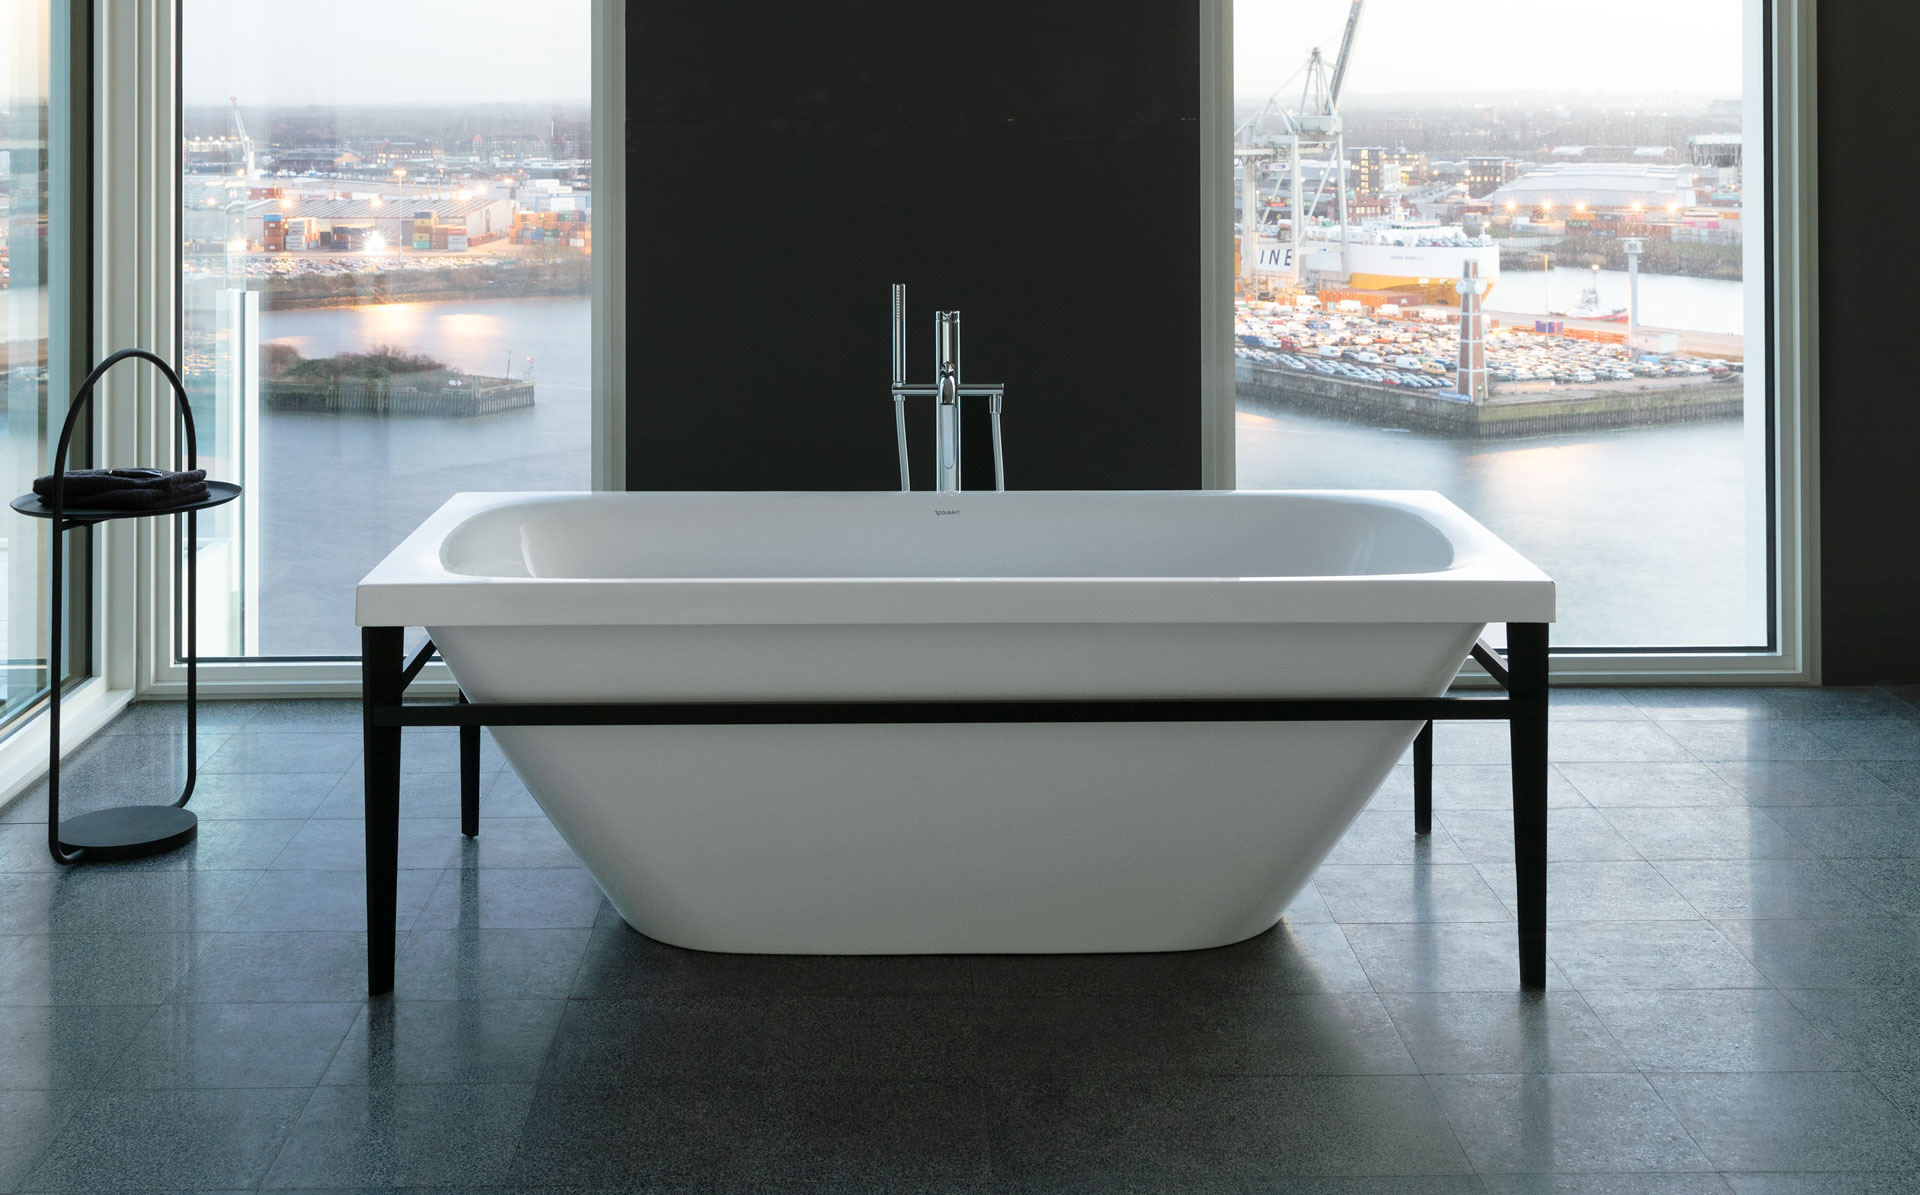 Bathroom with freestanding Xviu bathtub and view
